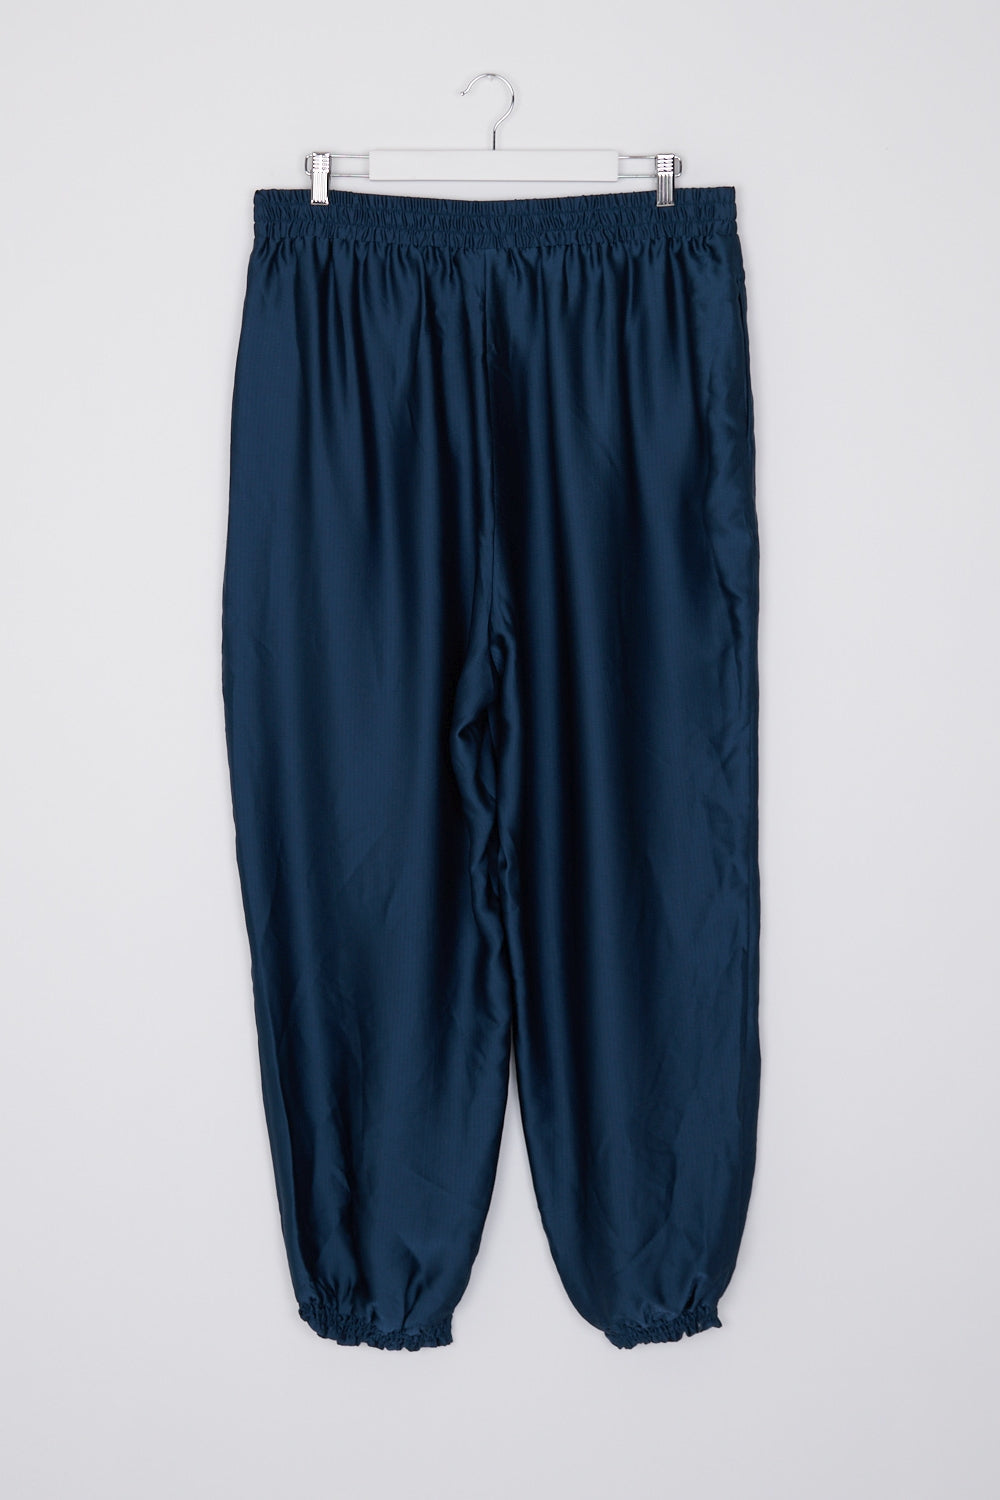 City Chic Blue Elasticated Waist Pants 16